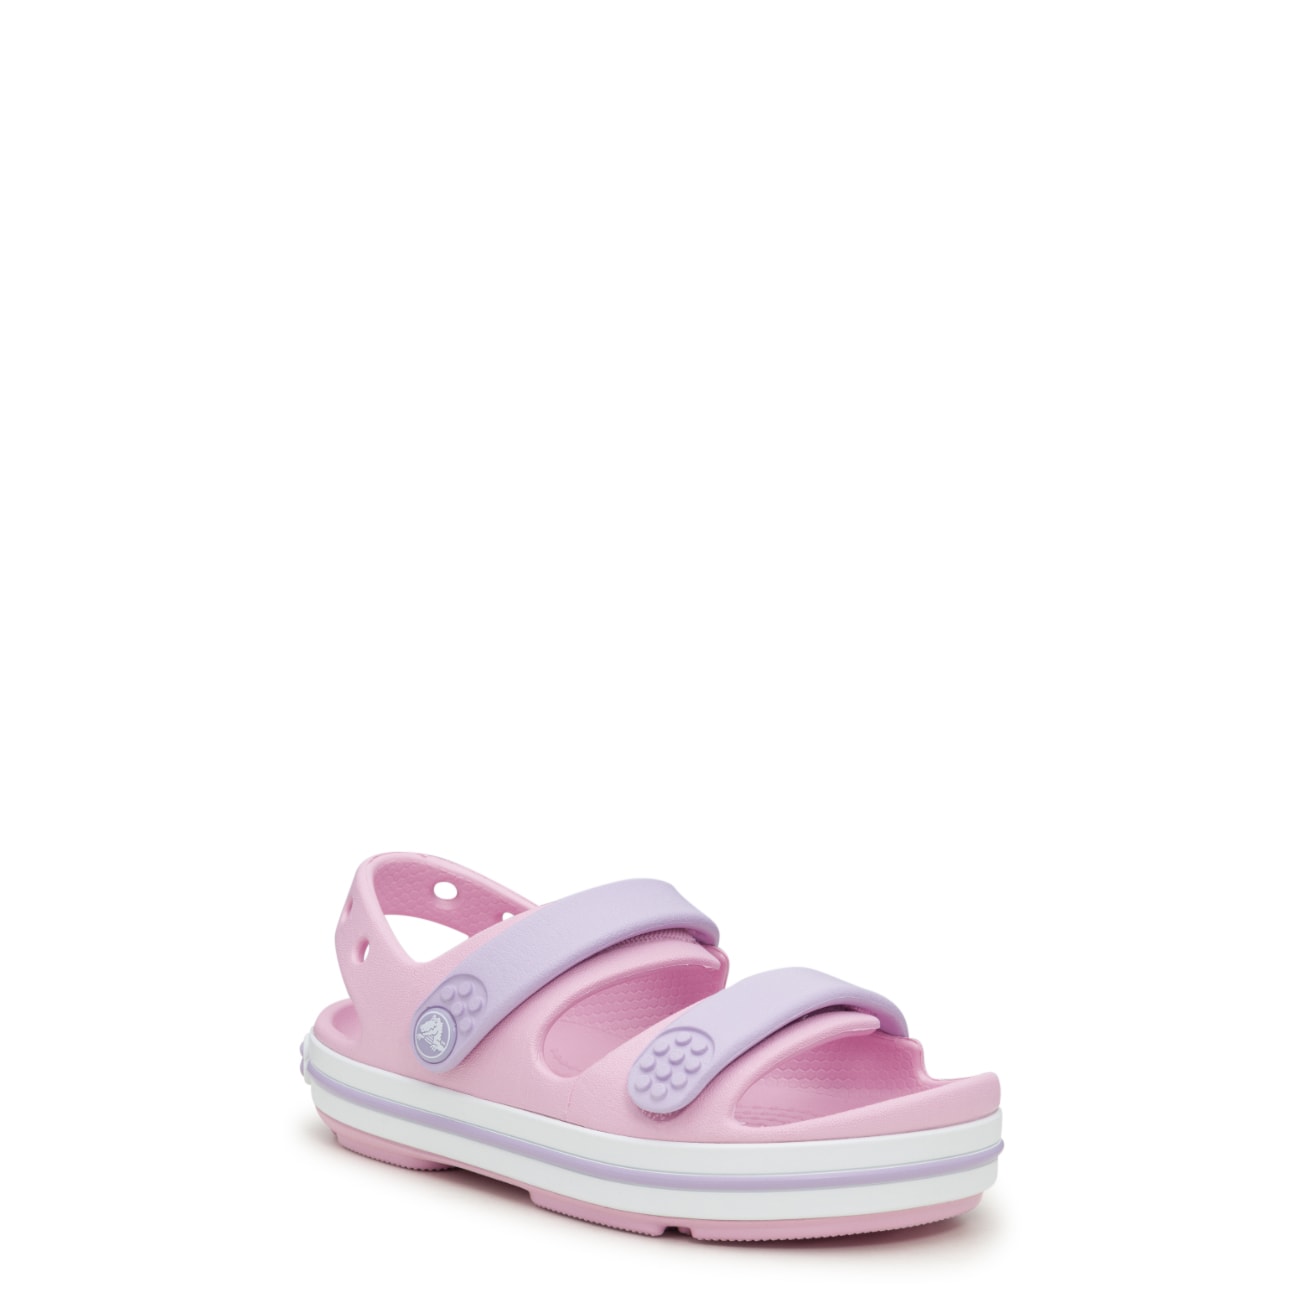 Toddler Boys' Crocband Cruiser Sandal